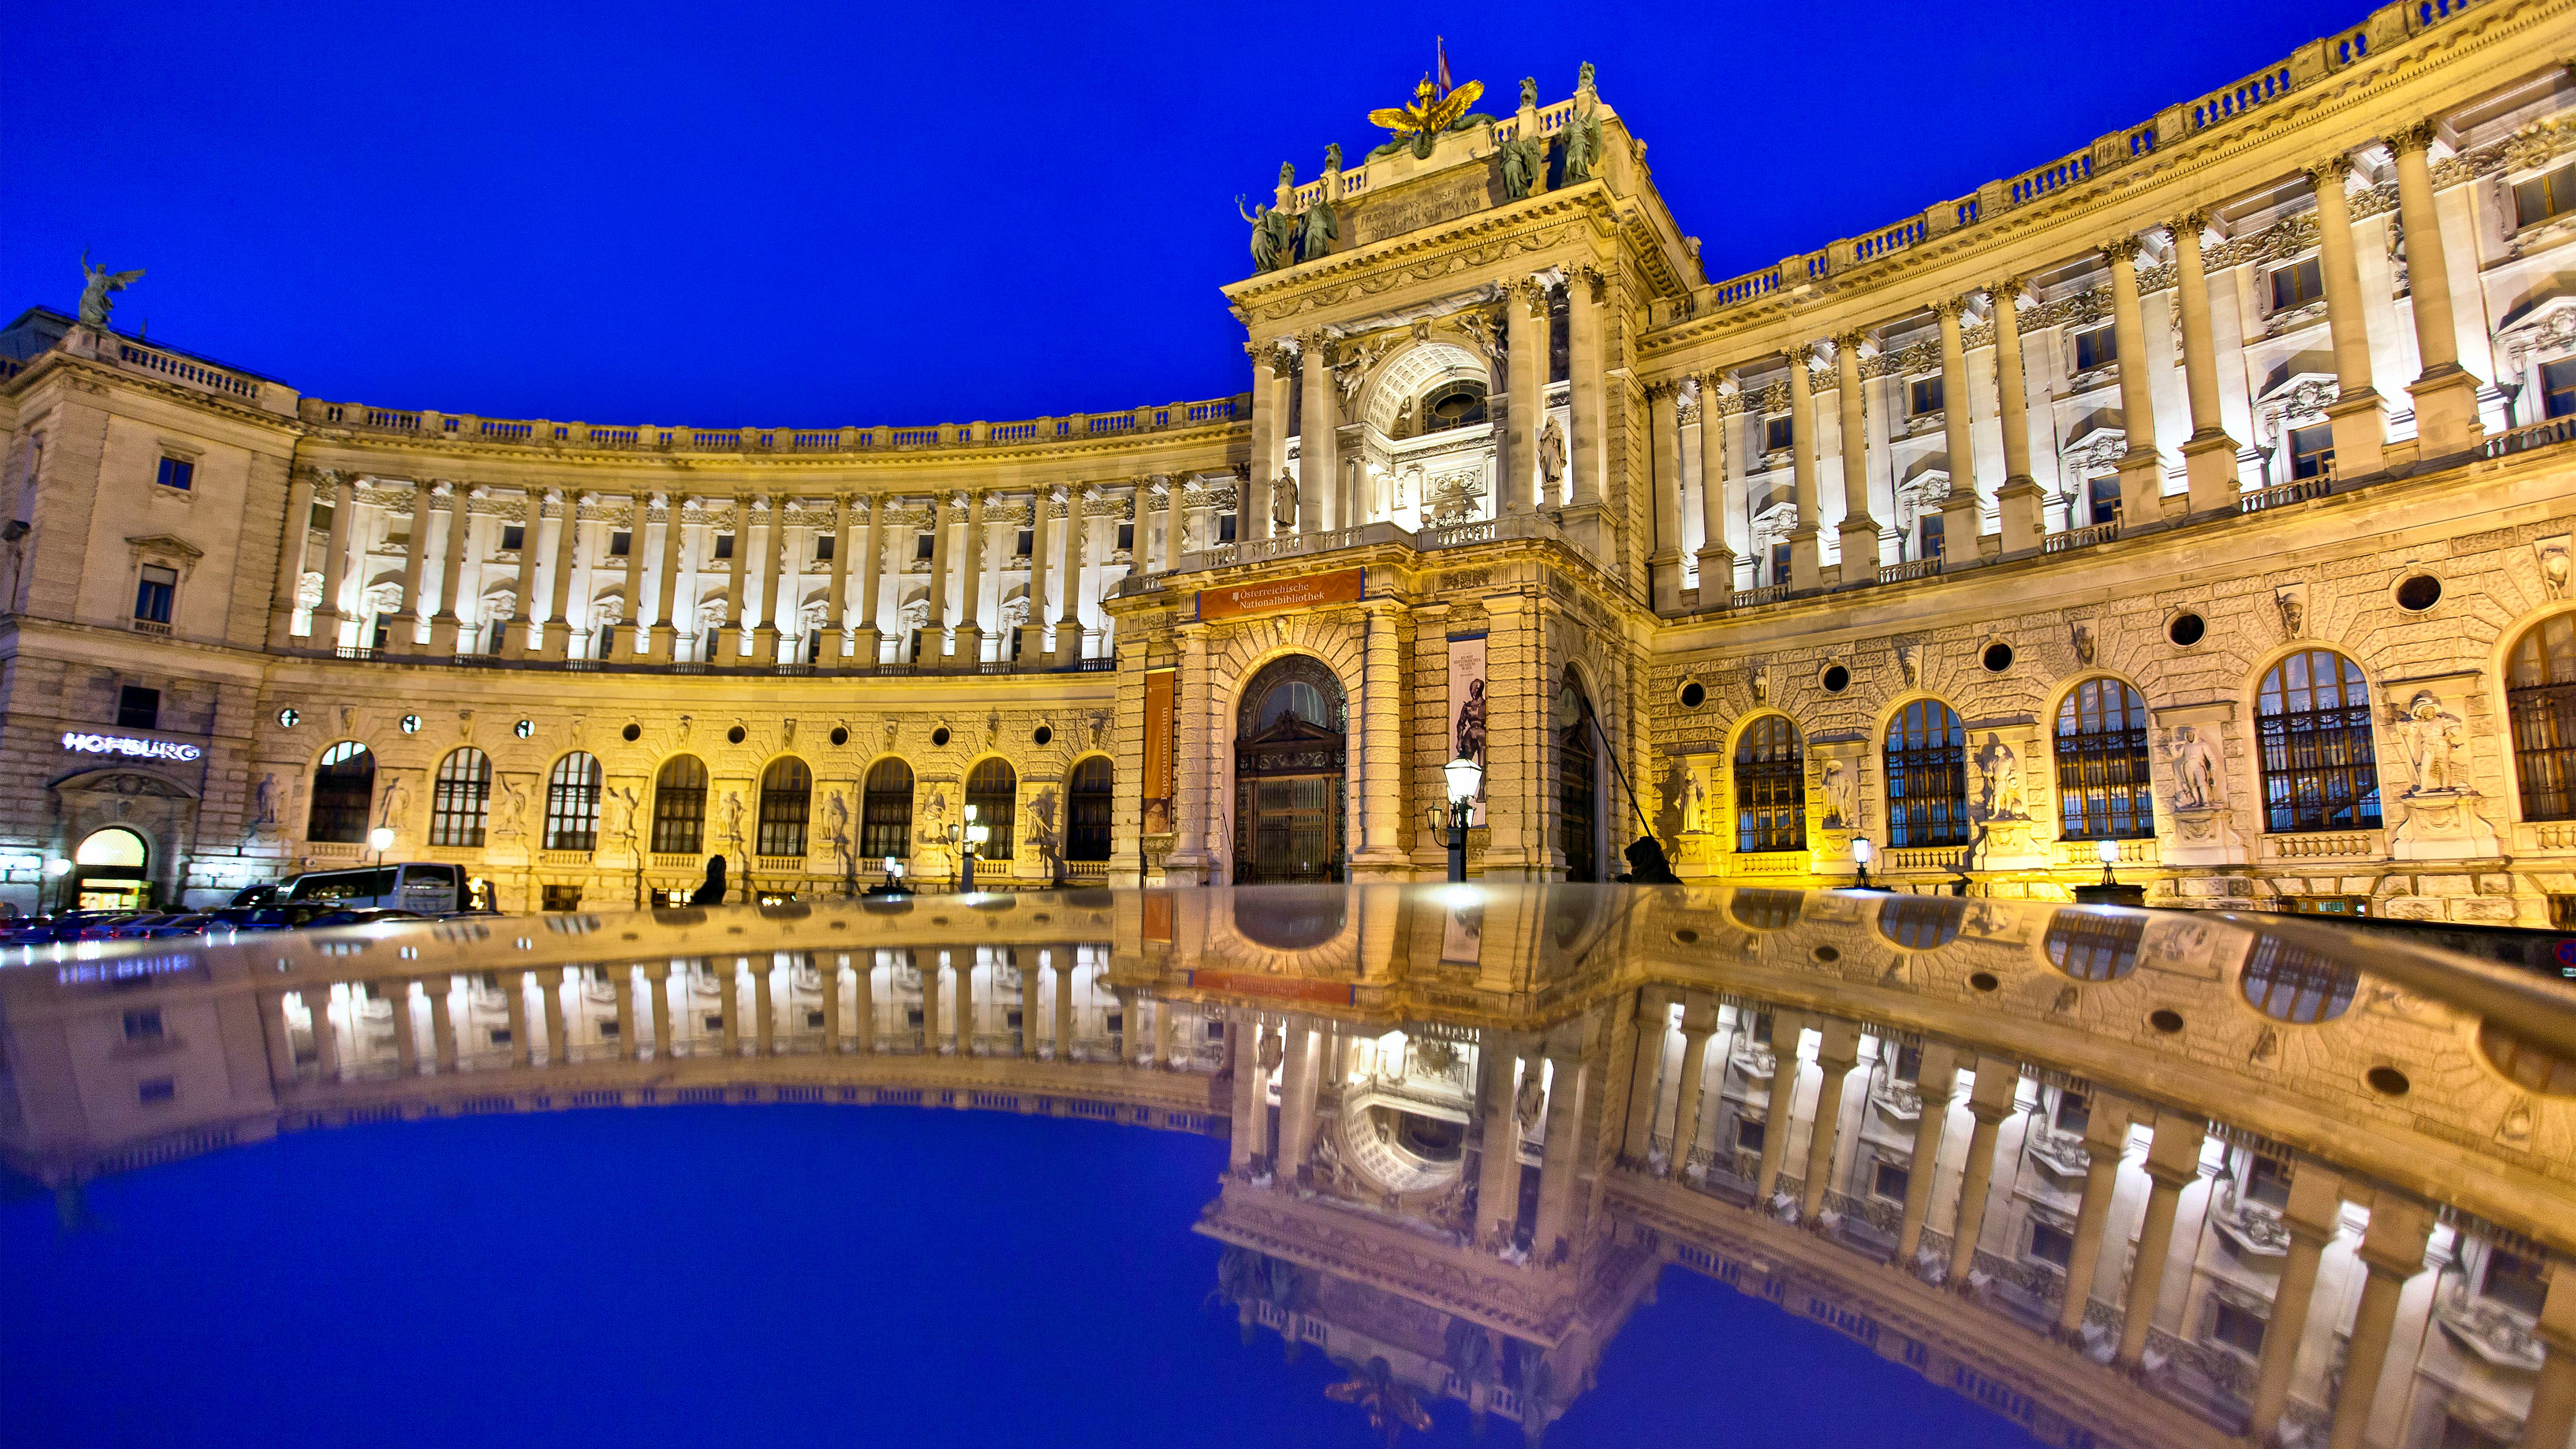 Old Vienna: The Hofburg – Having Me Time